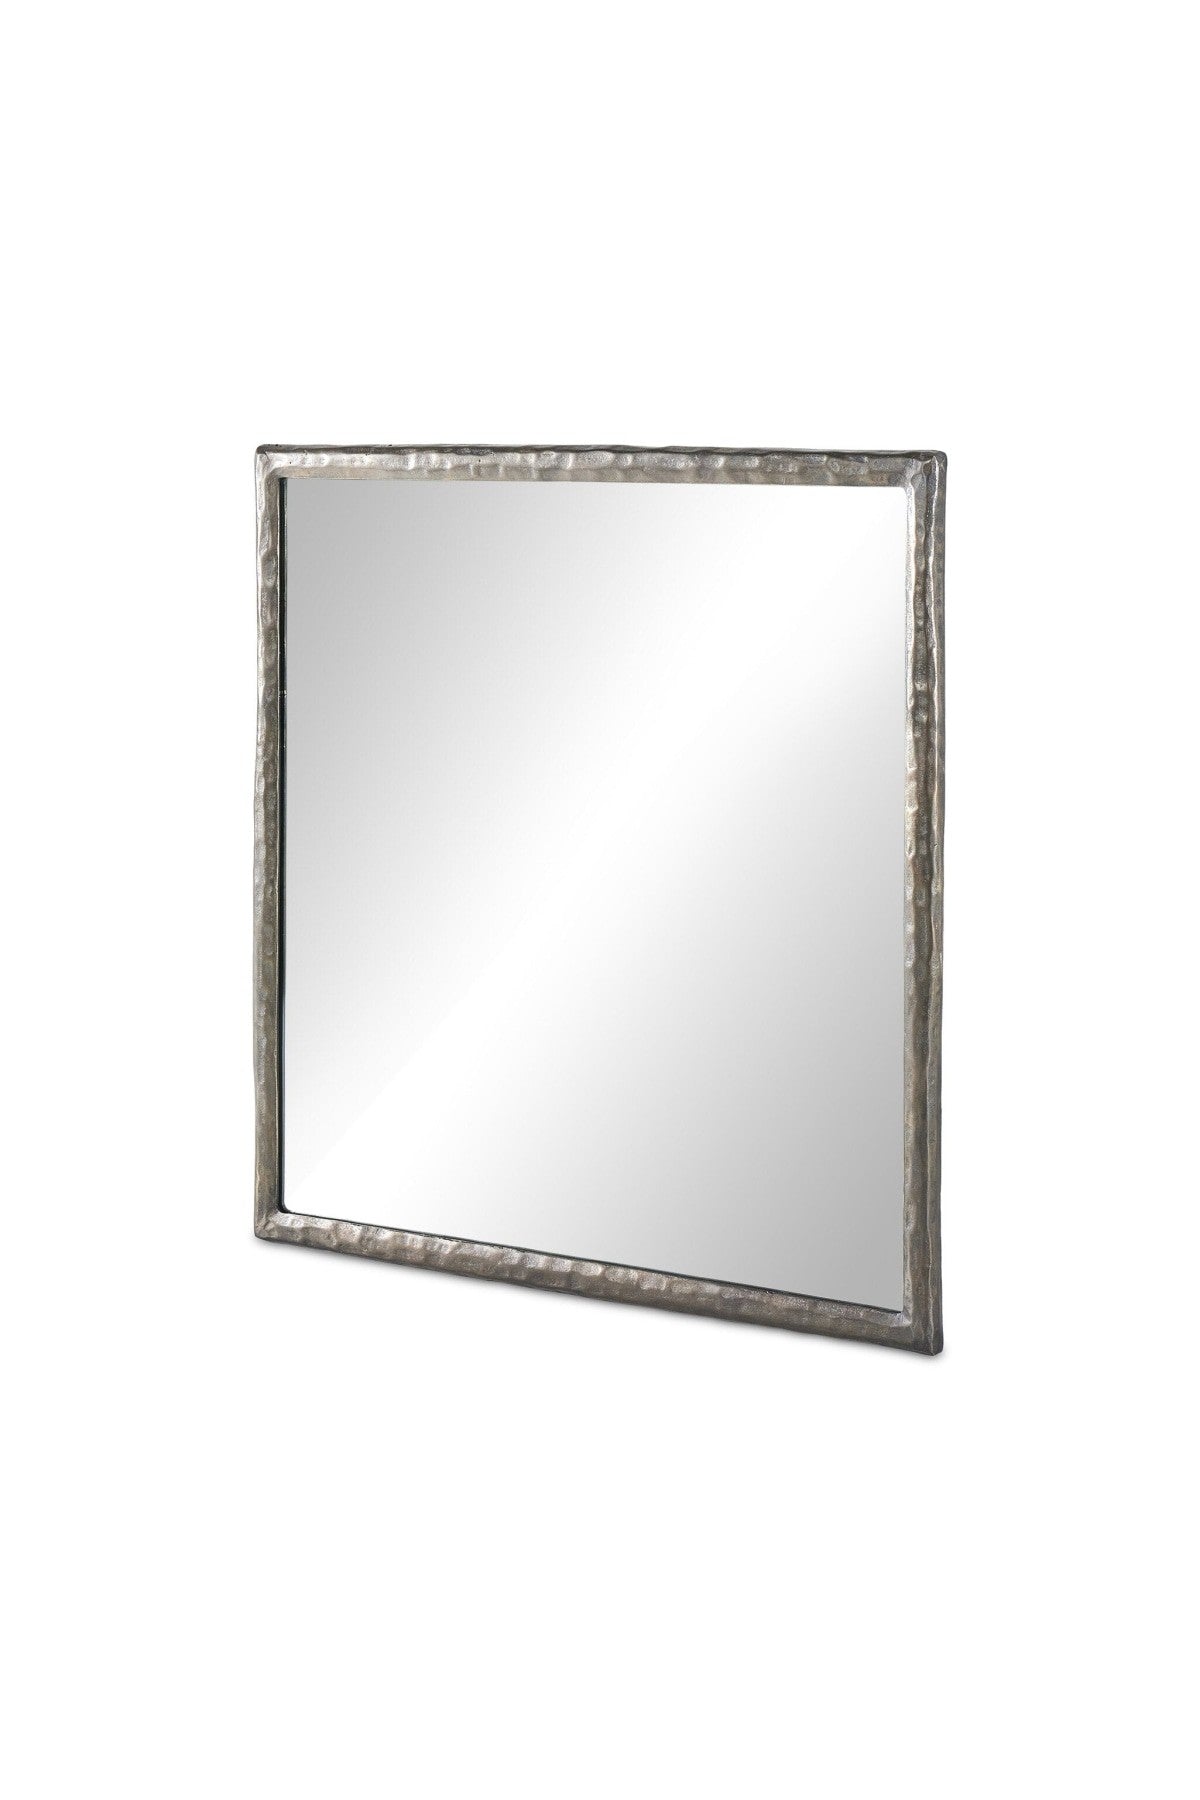 Leland Wall Mirror